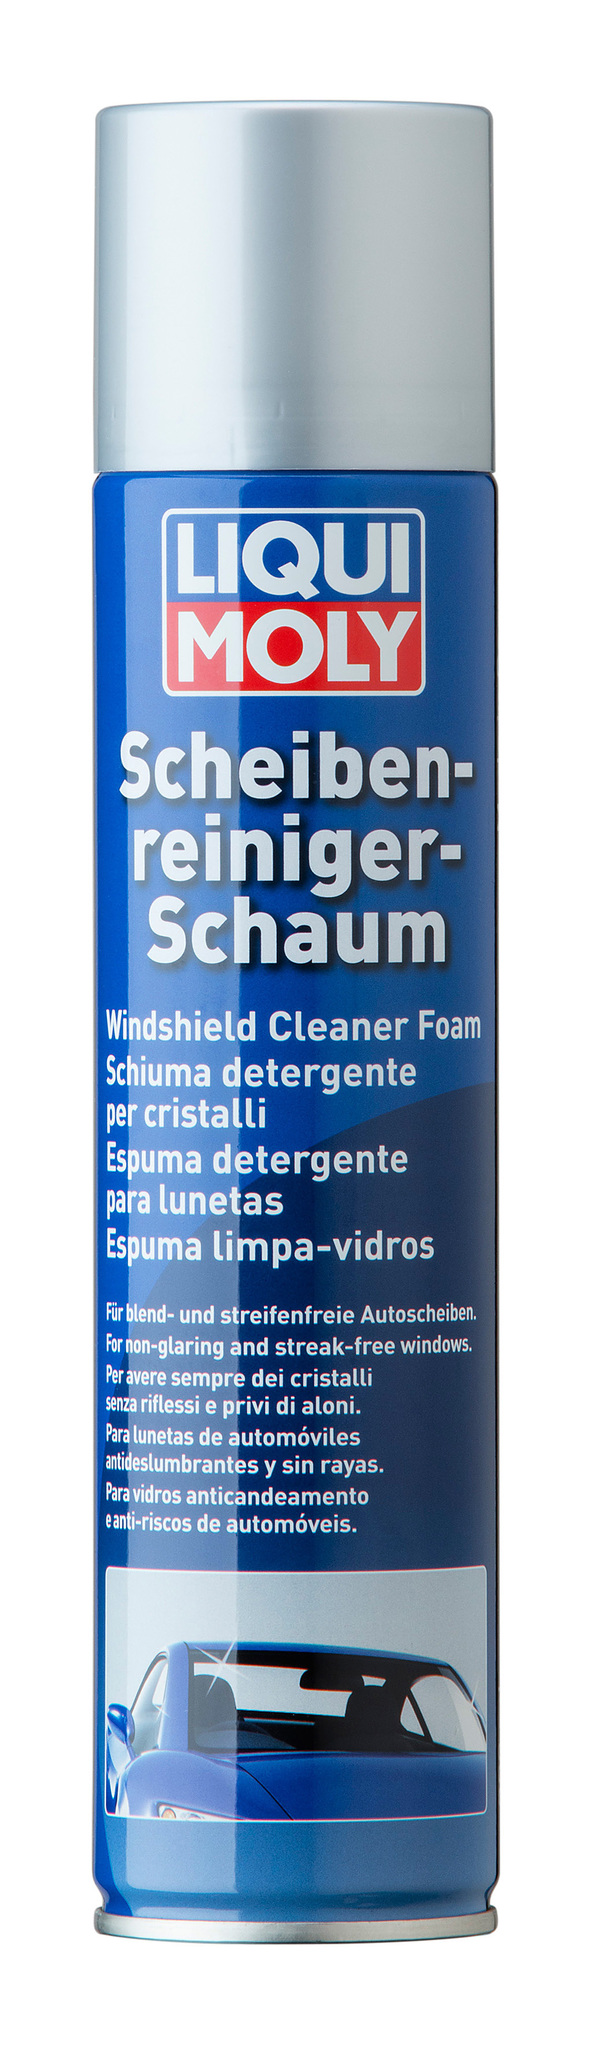 Liqui Moly Scheiben Reiniger Schaum Пена для мытья стекол